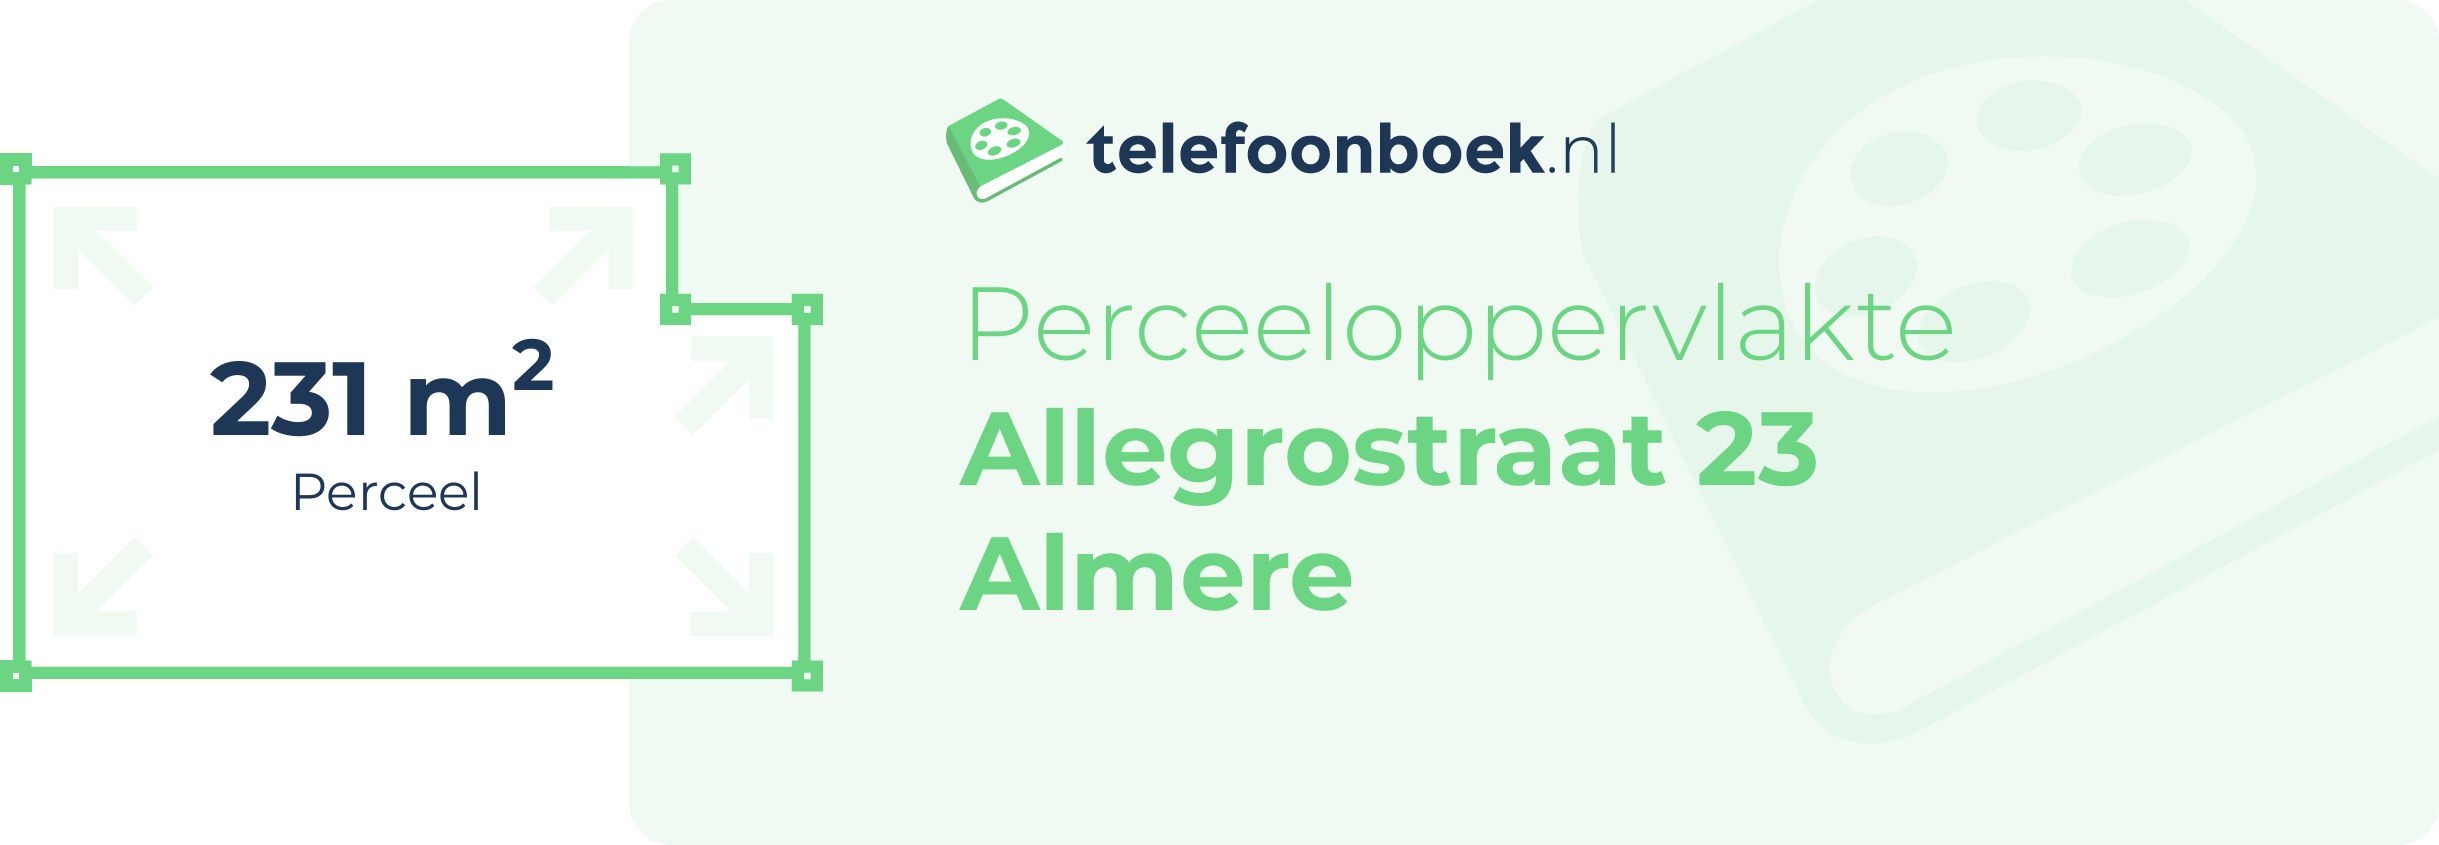 Perceeloppervlakte Allegrostraat 23 Almere